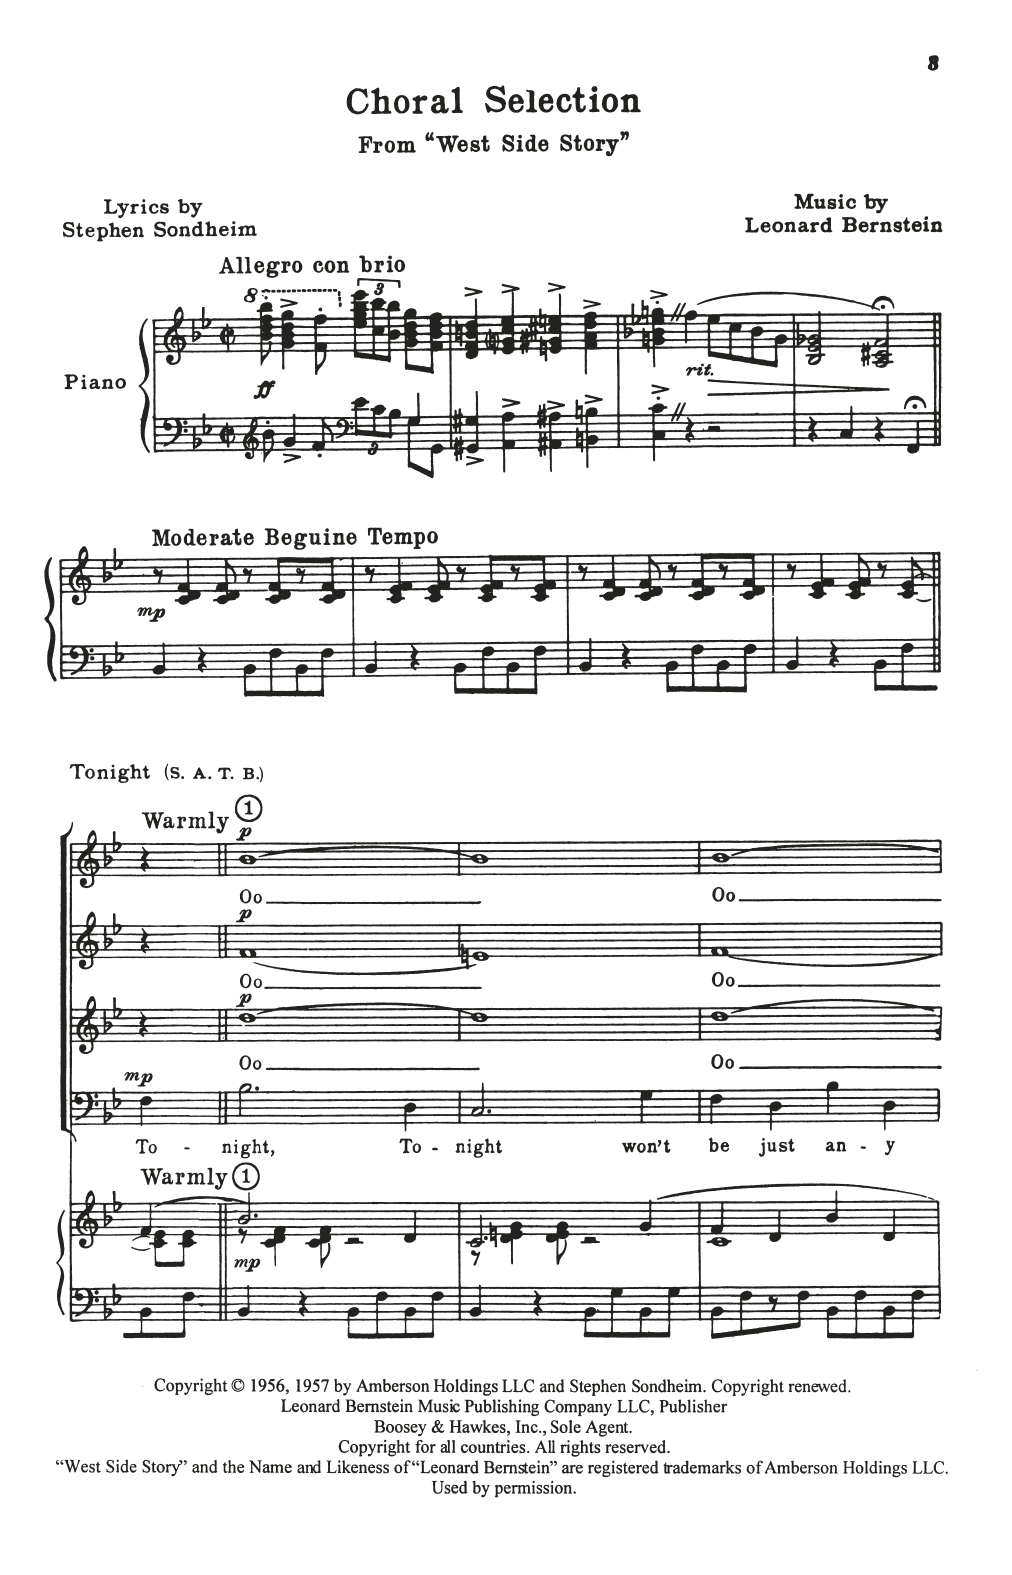 Leonard Bernstein & Stephen Sondheim Choral Medley from West Side Story (arr. William Stickles) Sheet Music Notes & Chords for SATB Choir - Download or Print PDF